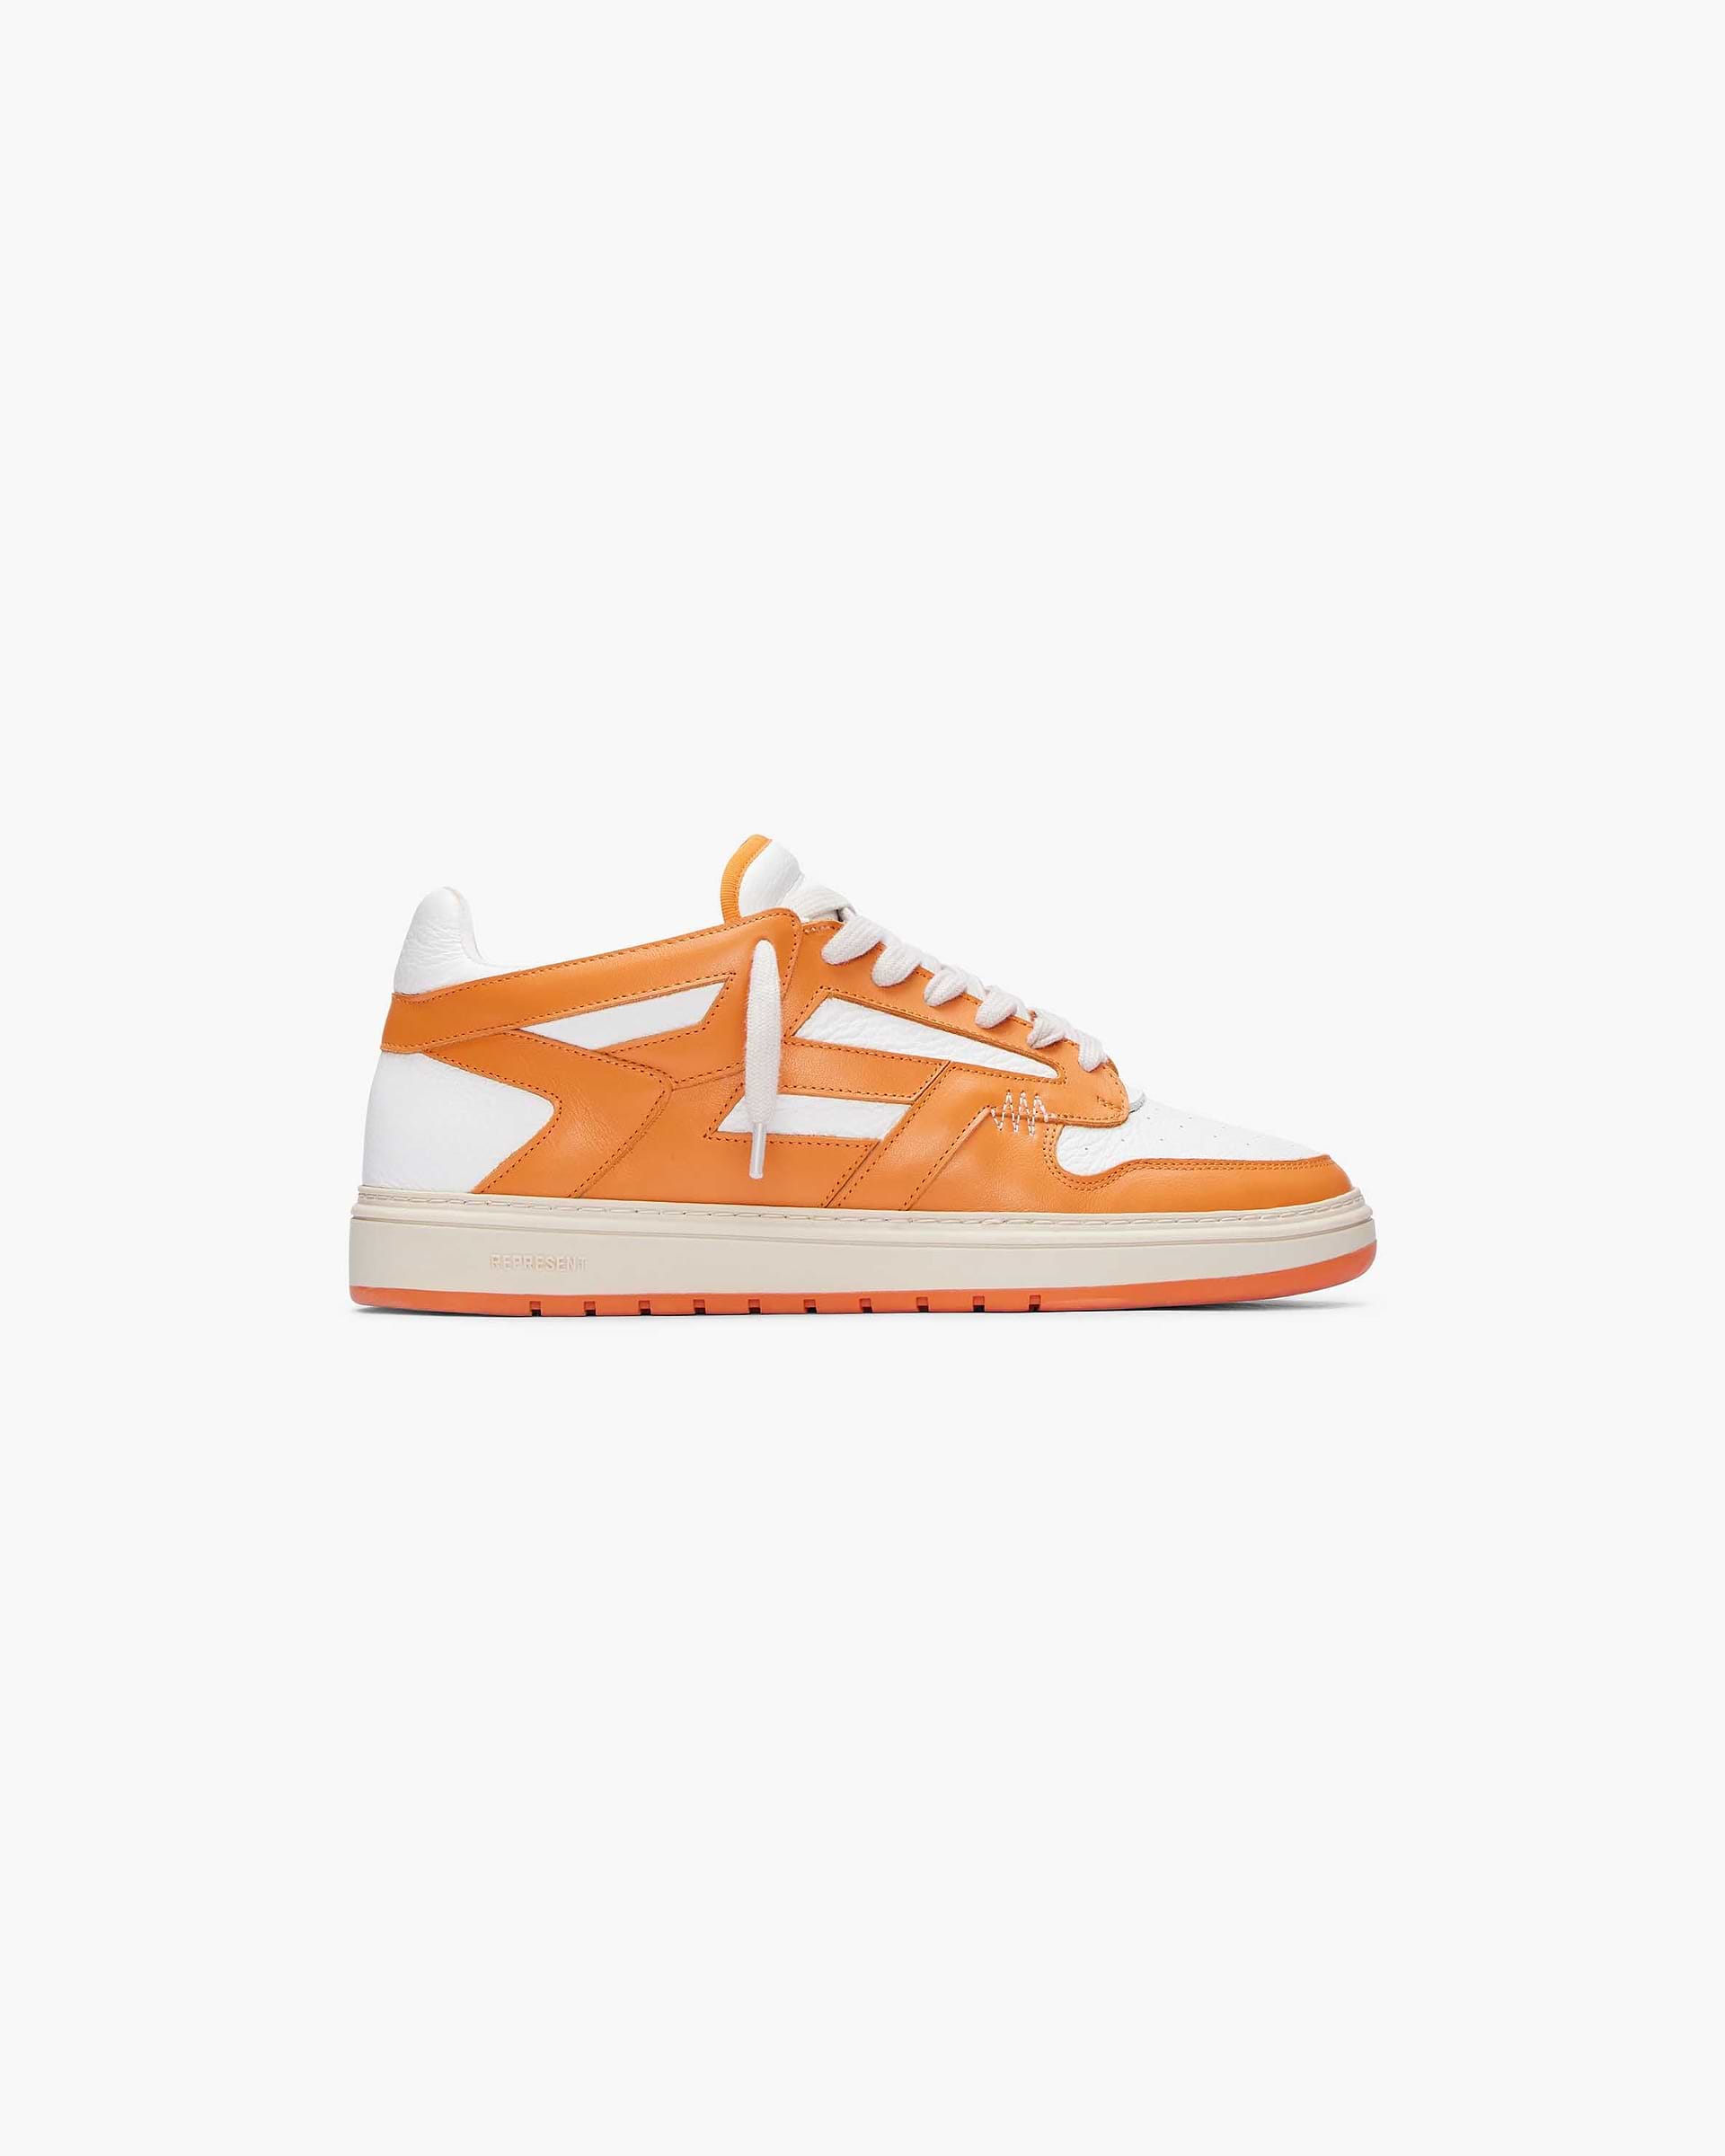 Reptor Low | Neon Orange Footwear SS23 | Represent Clo